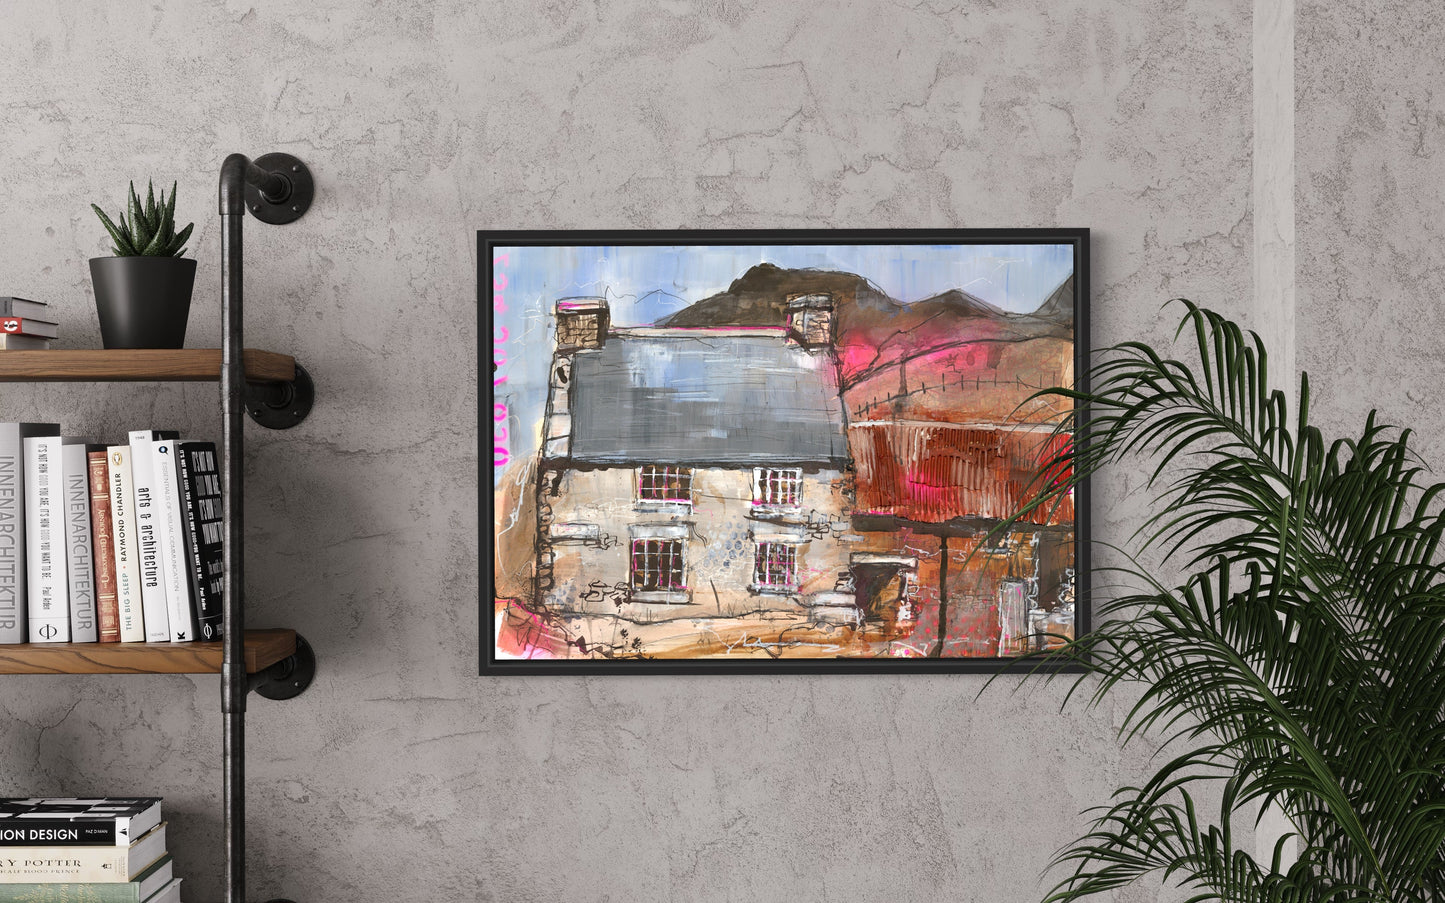 'Welsh Cottage Pink' [Original Painting]